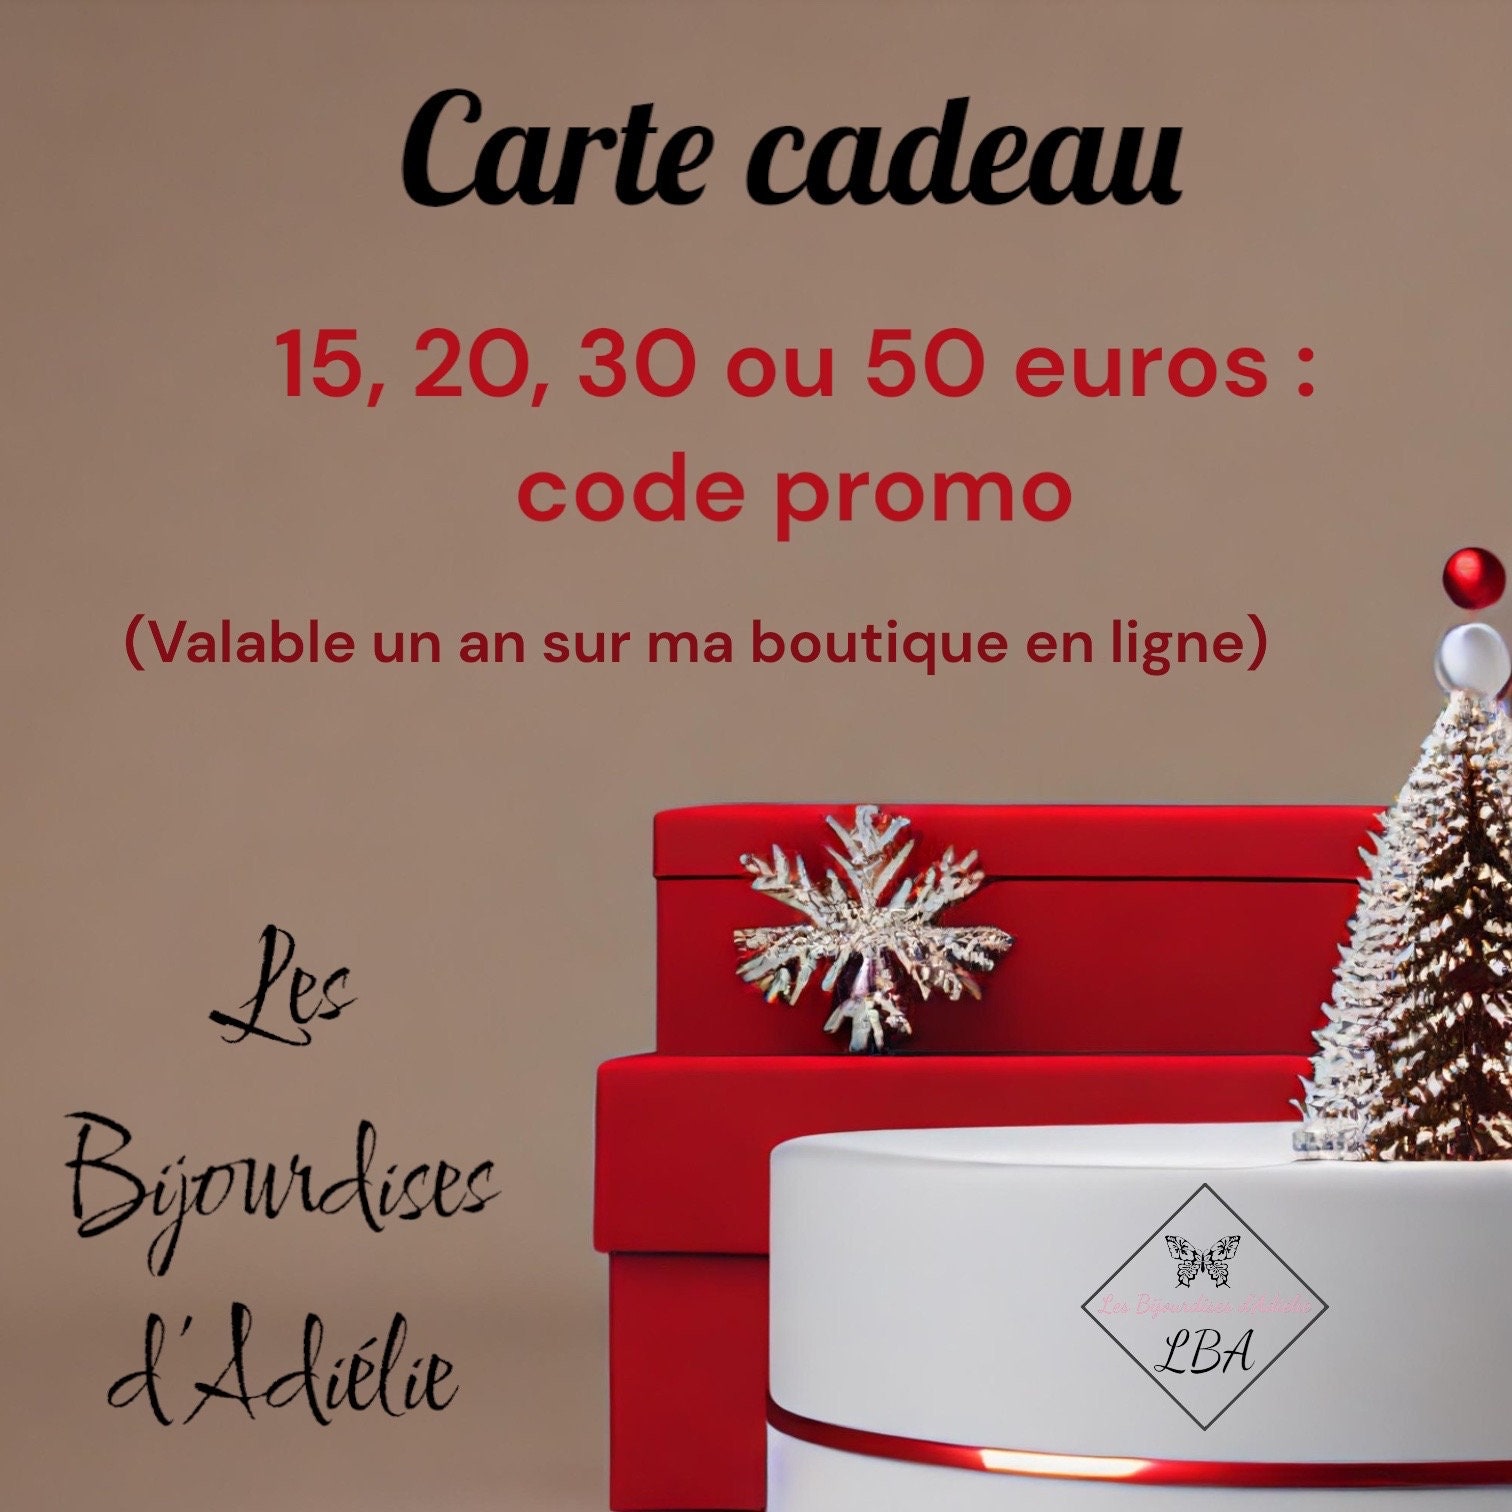 Carte cadeau 15, 20, 30 ou 50 euros : code promo envoyé par la poste ou  e-mail. -  France